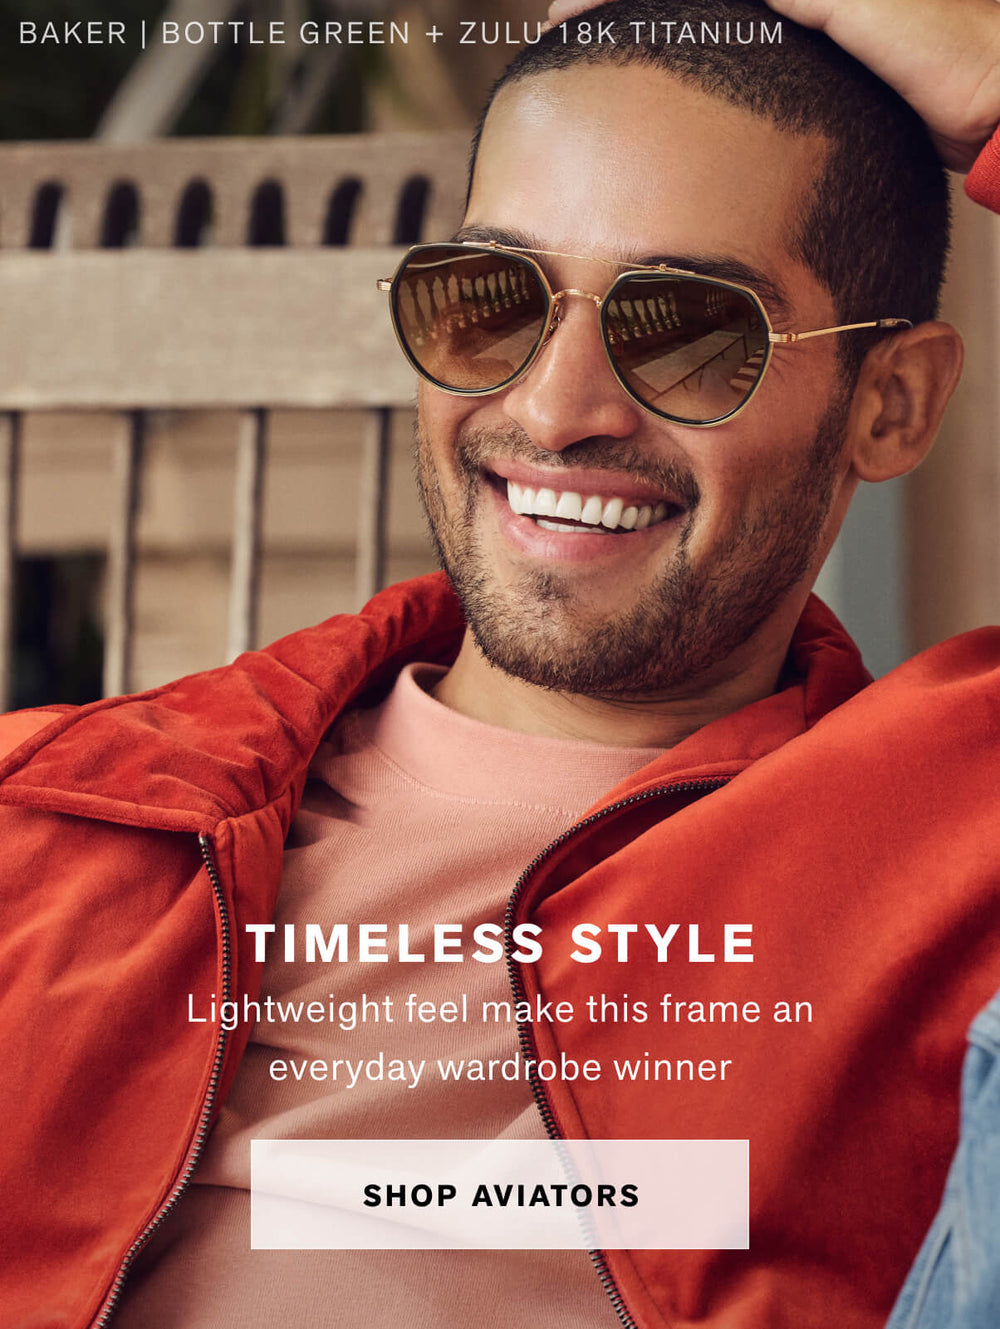 TIMELESS STYLE lightweight feel make this frame an everyday wardrobe winner.